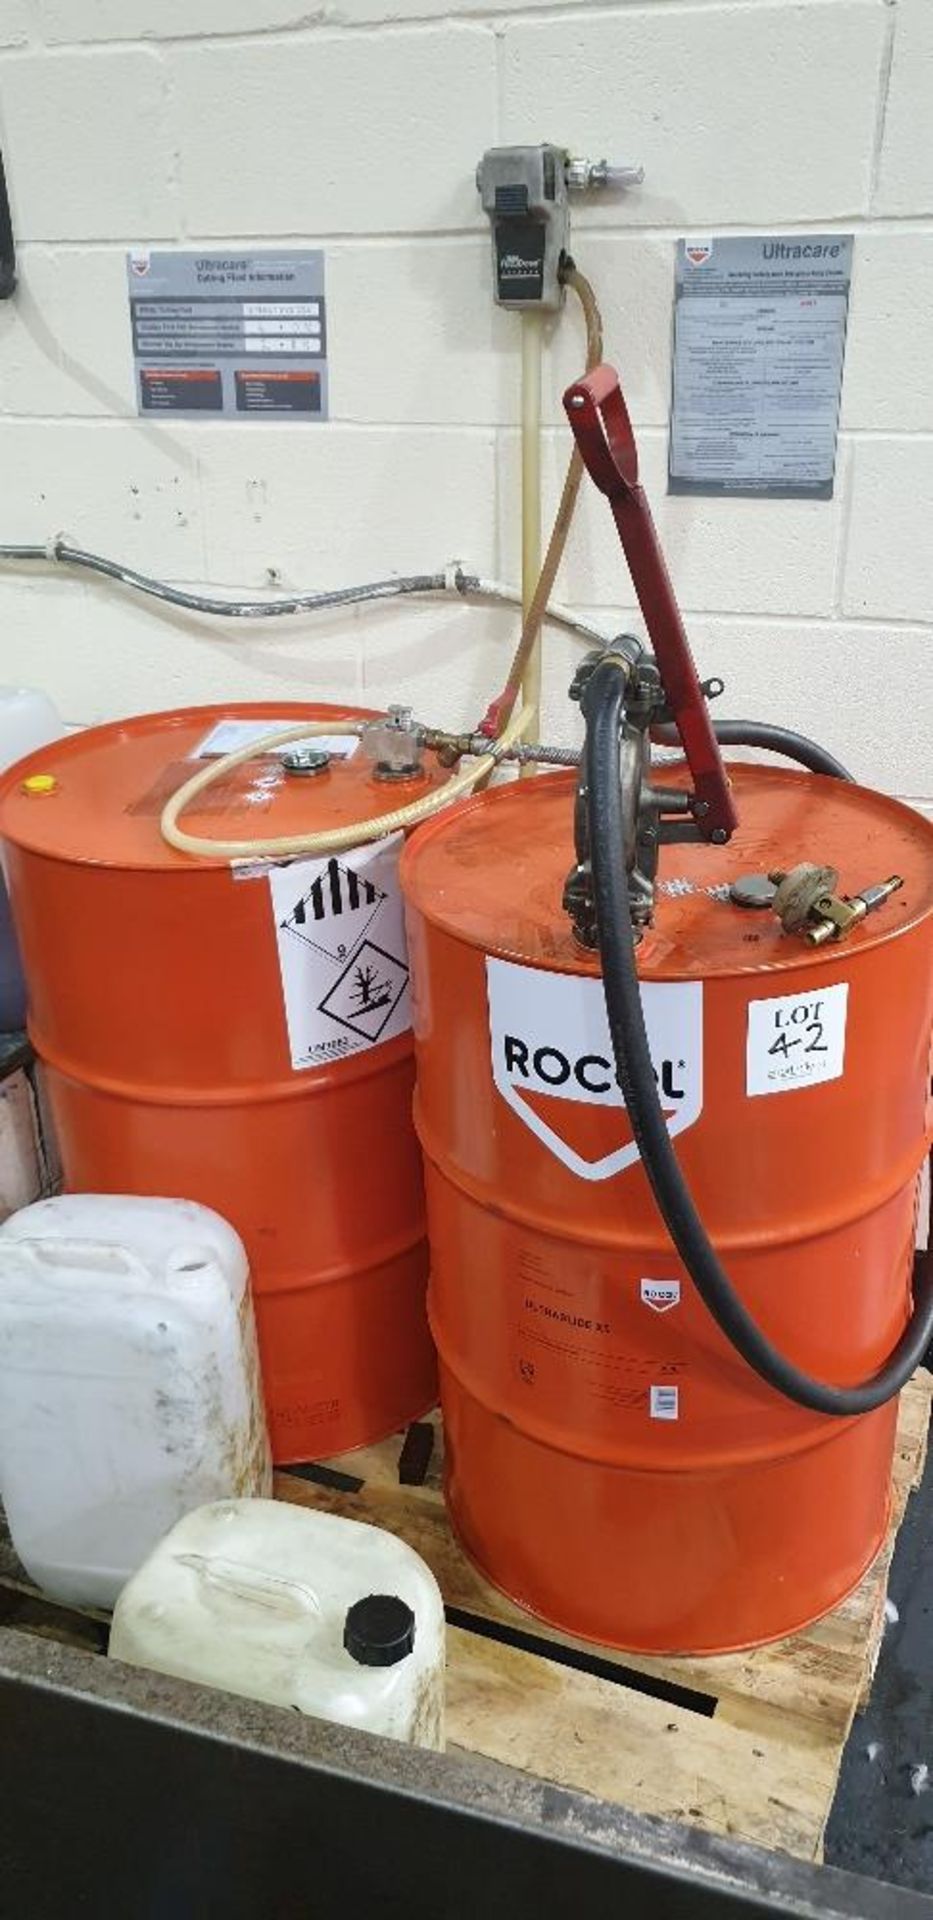 200L drum of Rocol Ultraglide x 5 with manual drum pump